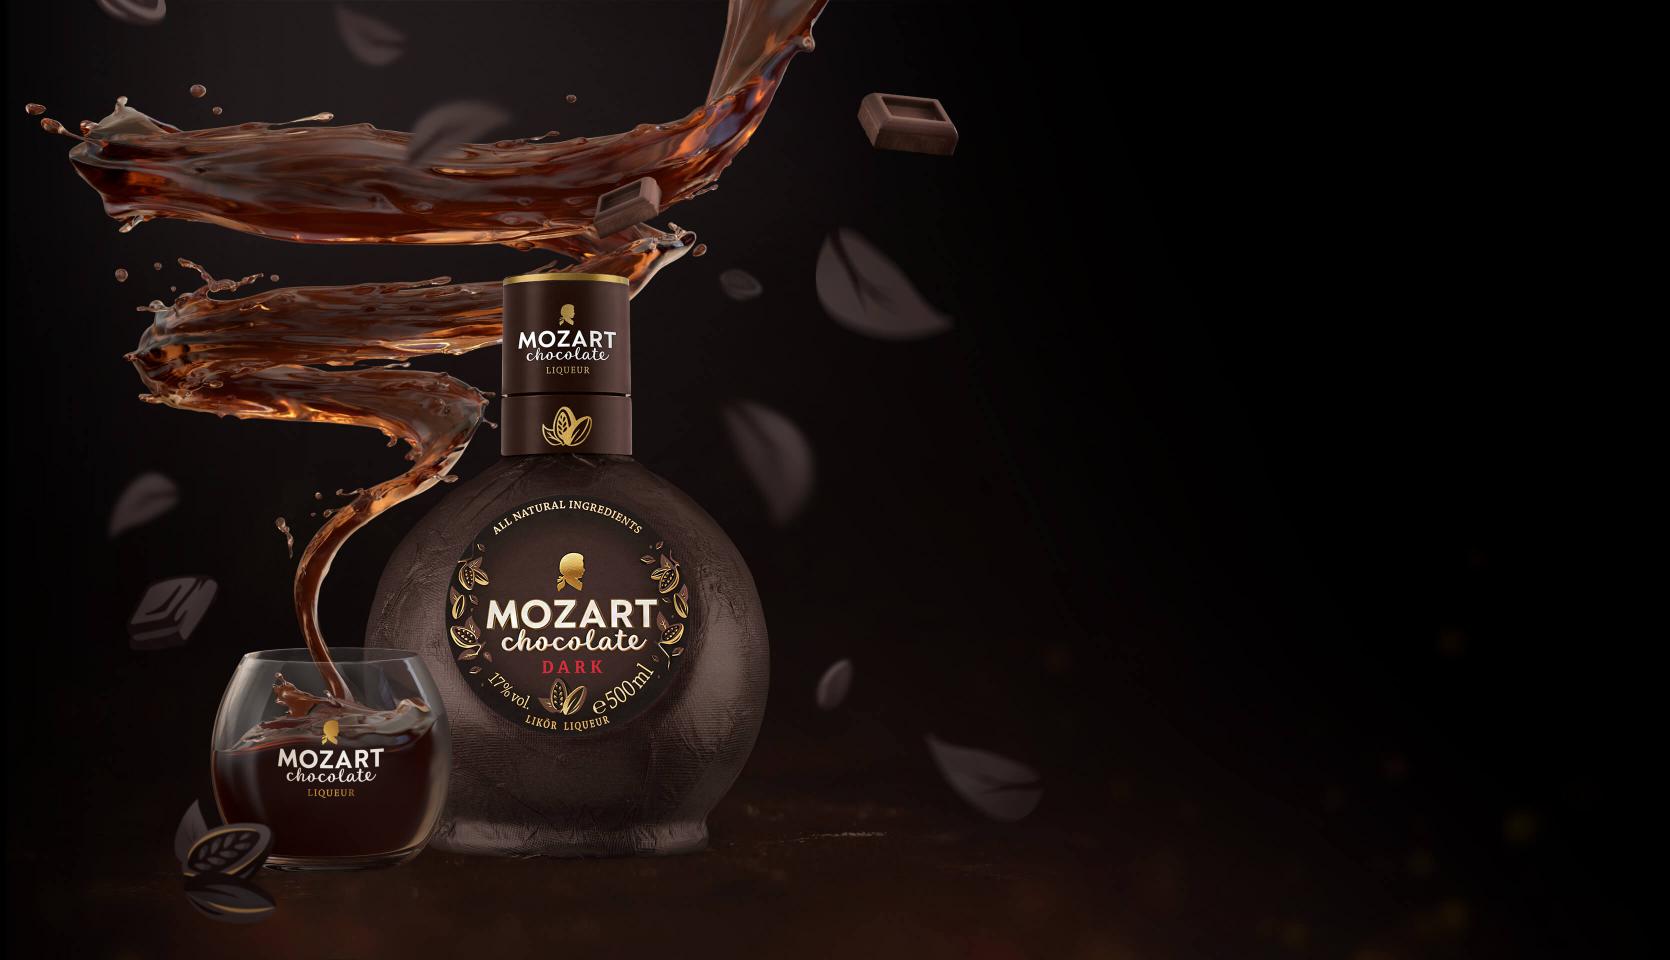 Mozart Chocolate Dark with chocolate swirl and Mozart glass